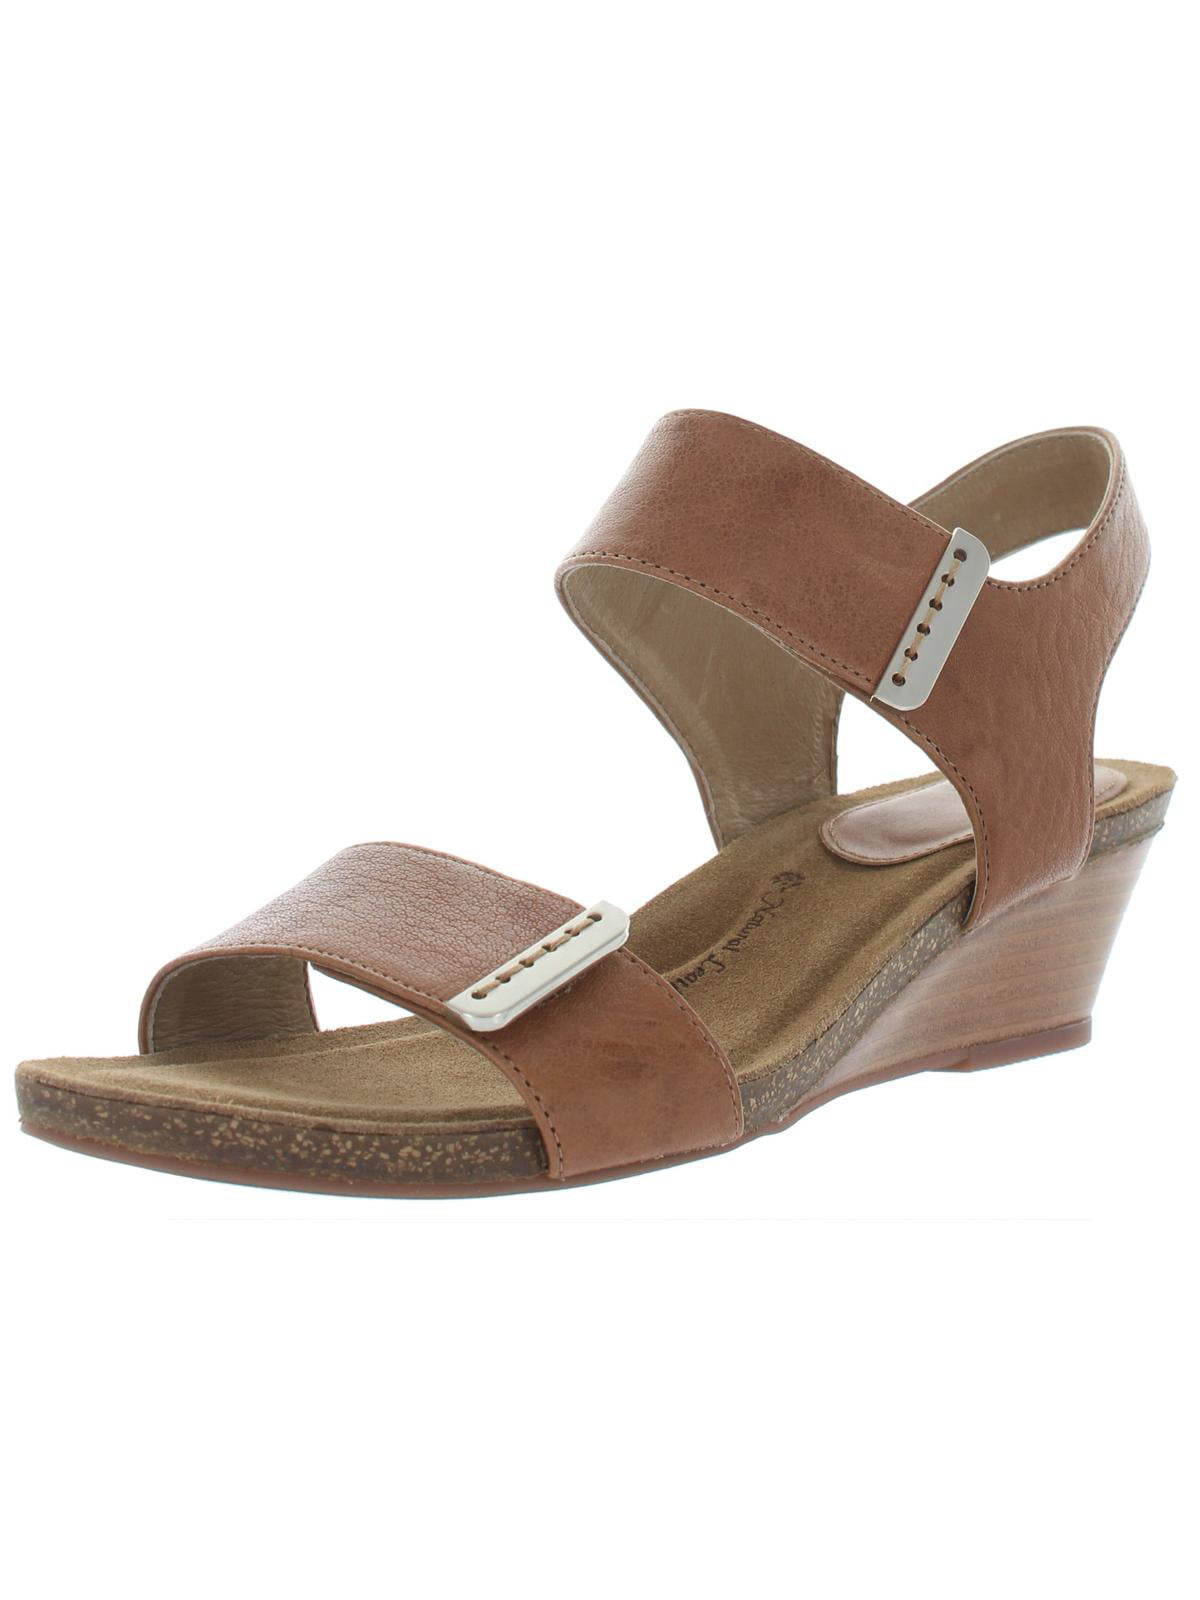 Sofft Womens Verdi Leather Comfort Wedge Sandals - Walmart.com